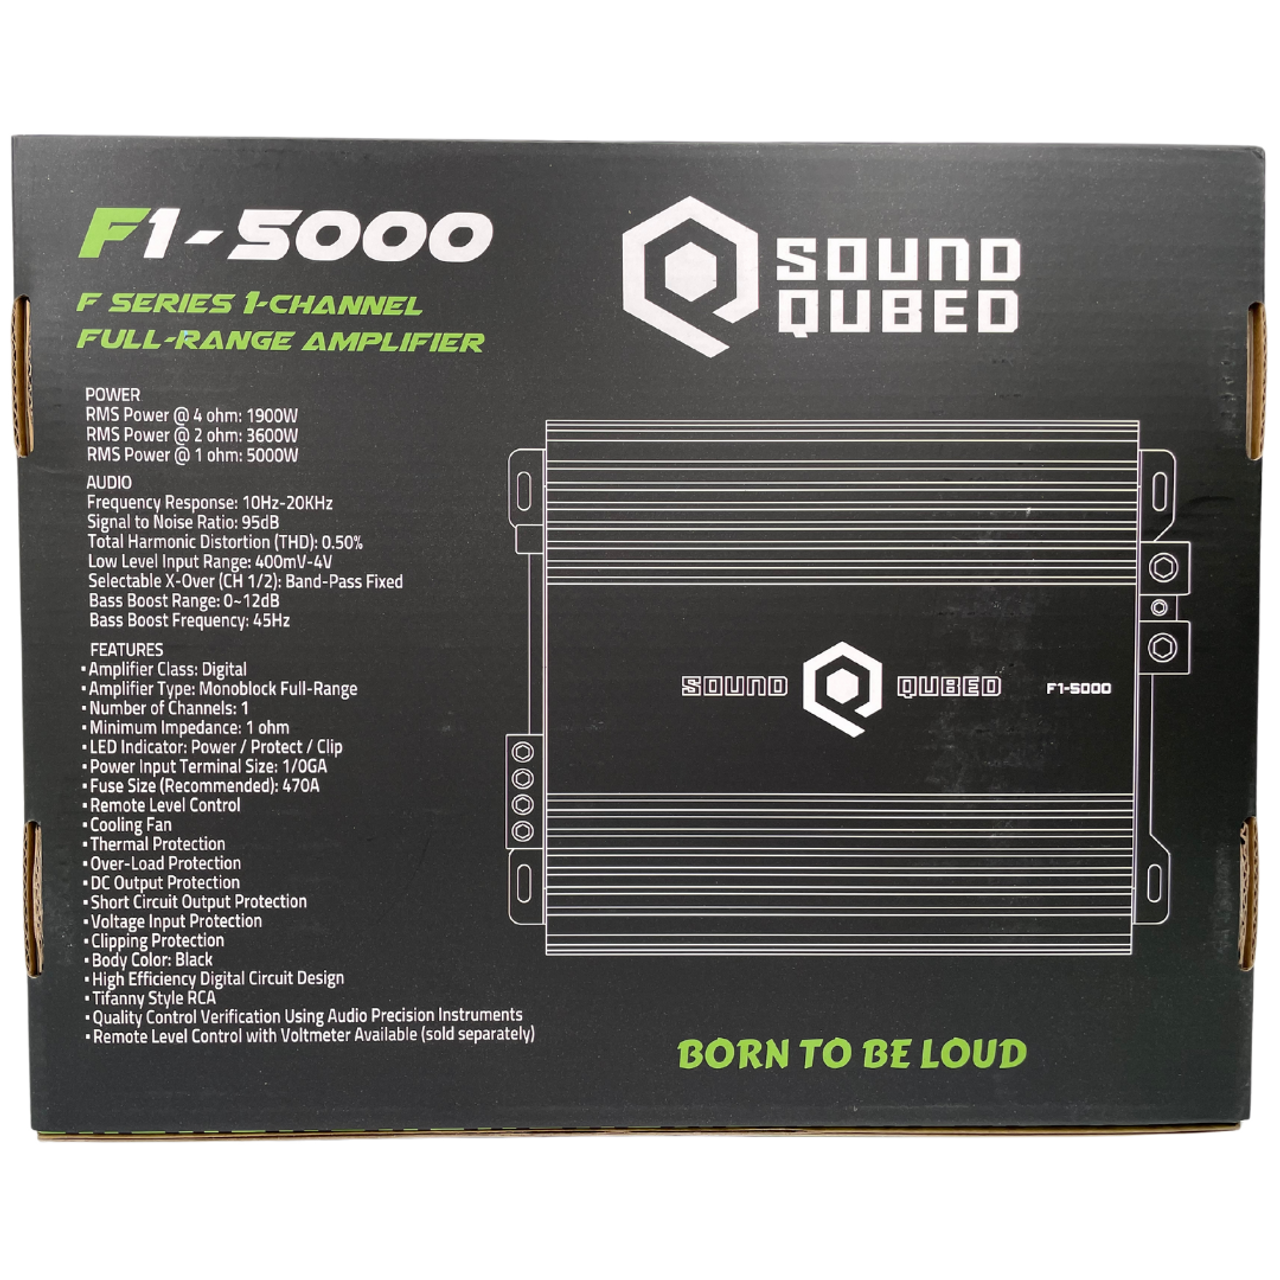 SOUNDQUBED F1-5000 Full Bridge 5000 Watts Mono Block Amplifier